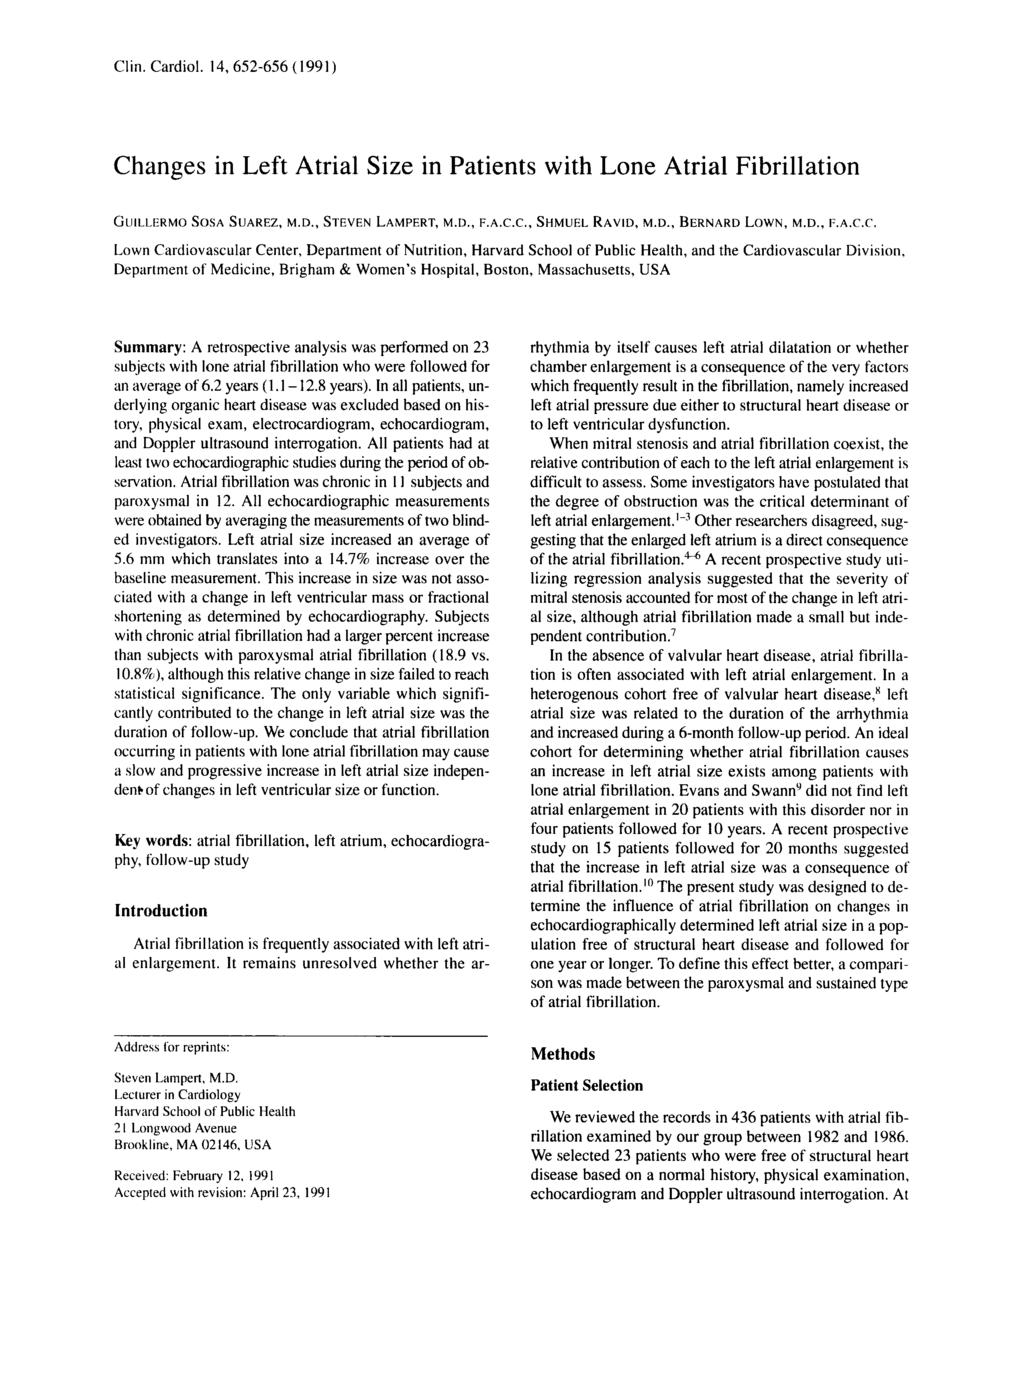 Clin. Cardiol. 14,652-656 (1991) Changes in Left Atrial Size in Patients with Lone Atrial Fibrillation GUILLERMO SOSA SUAREZ, M.D., SIEVEN LAMPERT, M.D., F.A.C.C., SHMUEL RAVID, M.D., BERNARD LOWN, M.